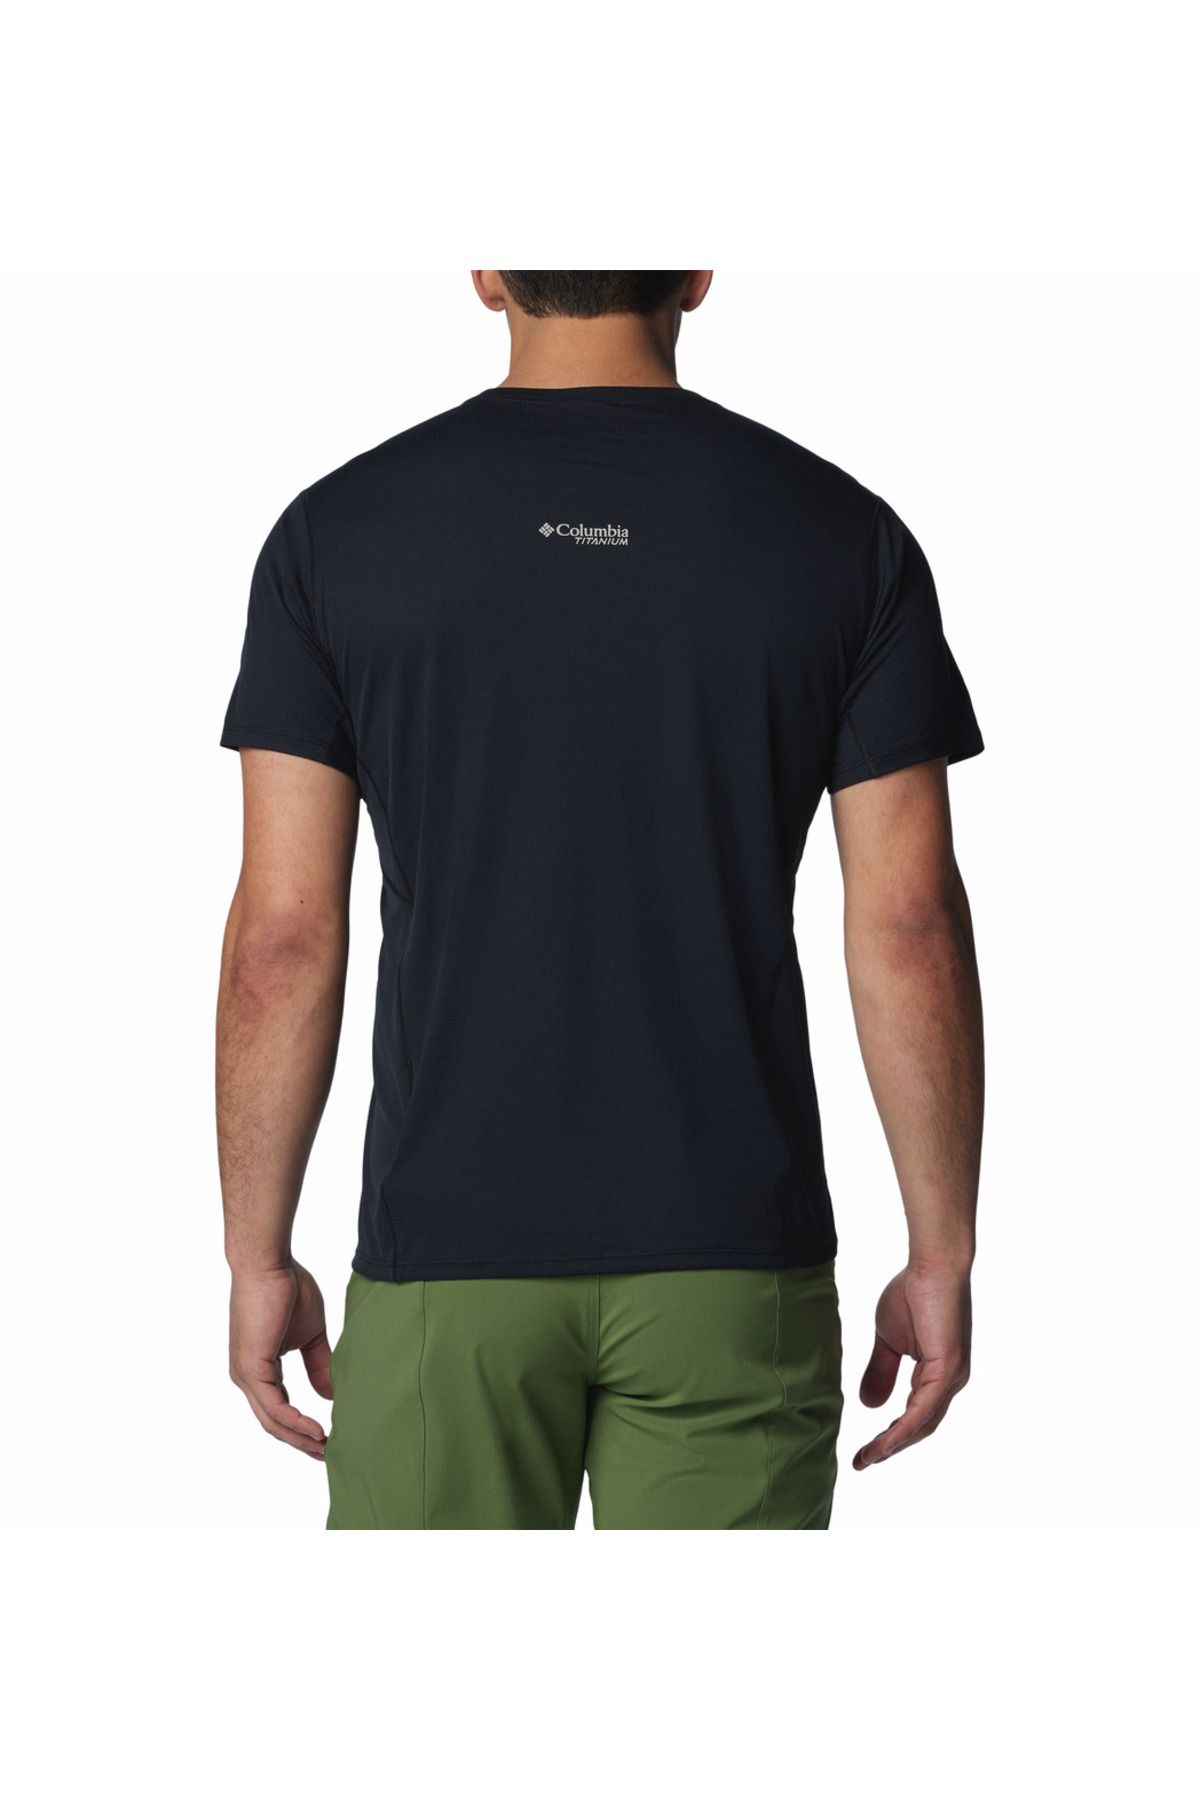 Columbia Cirque River Erkek Kısa Kollu T-Shirt